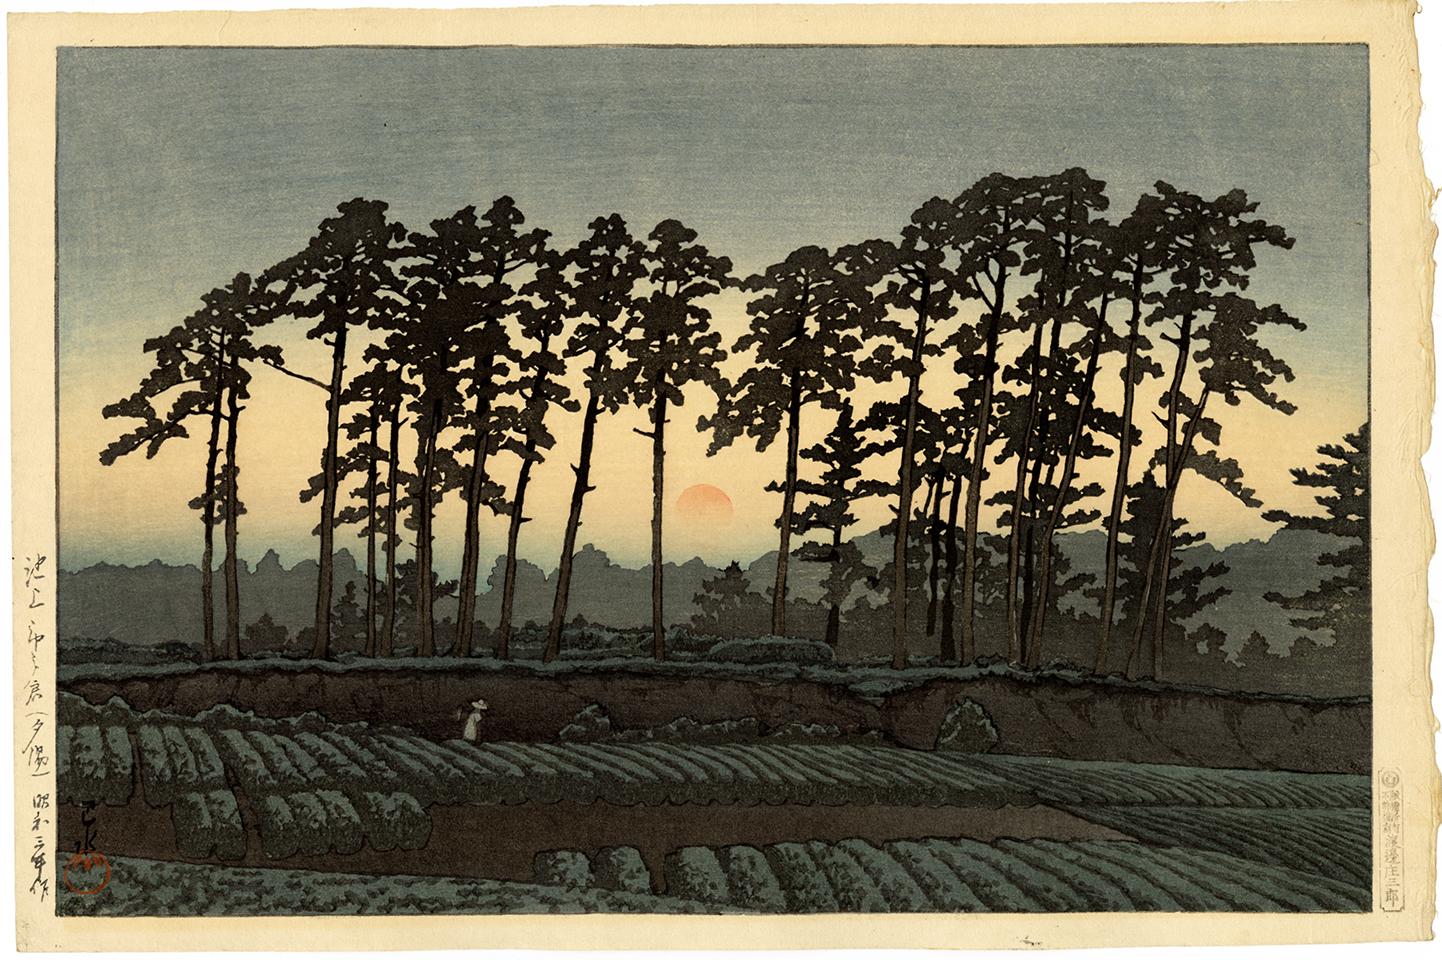 Kawase Hasui Landscape Print - Sunset at Ichinokura, Ikegami, alternate color version